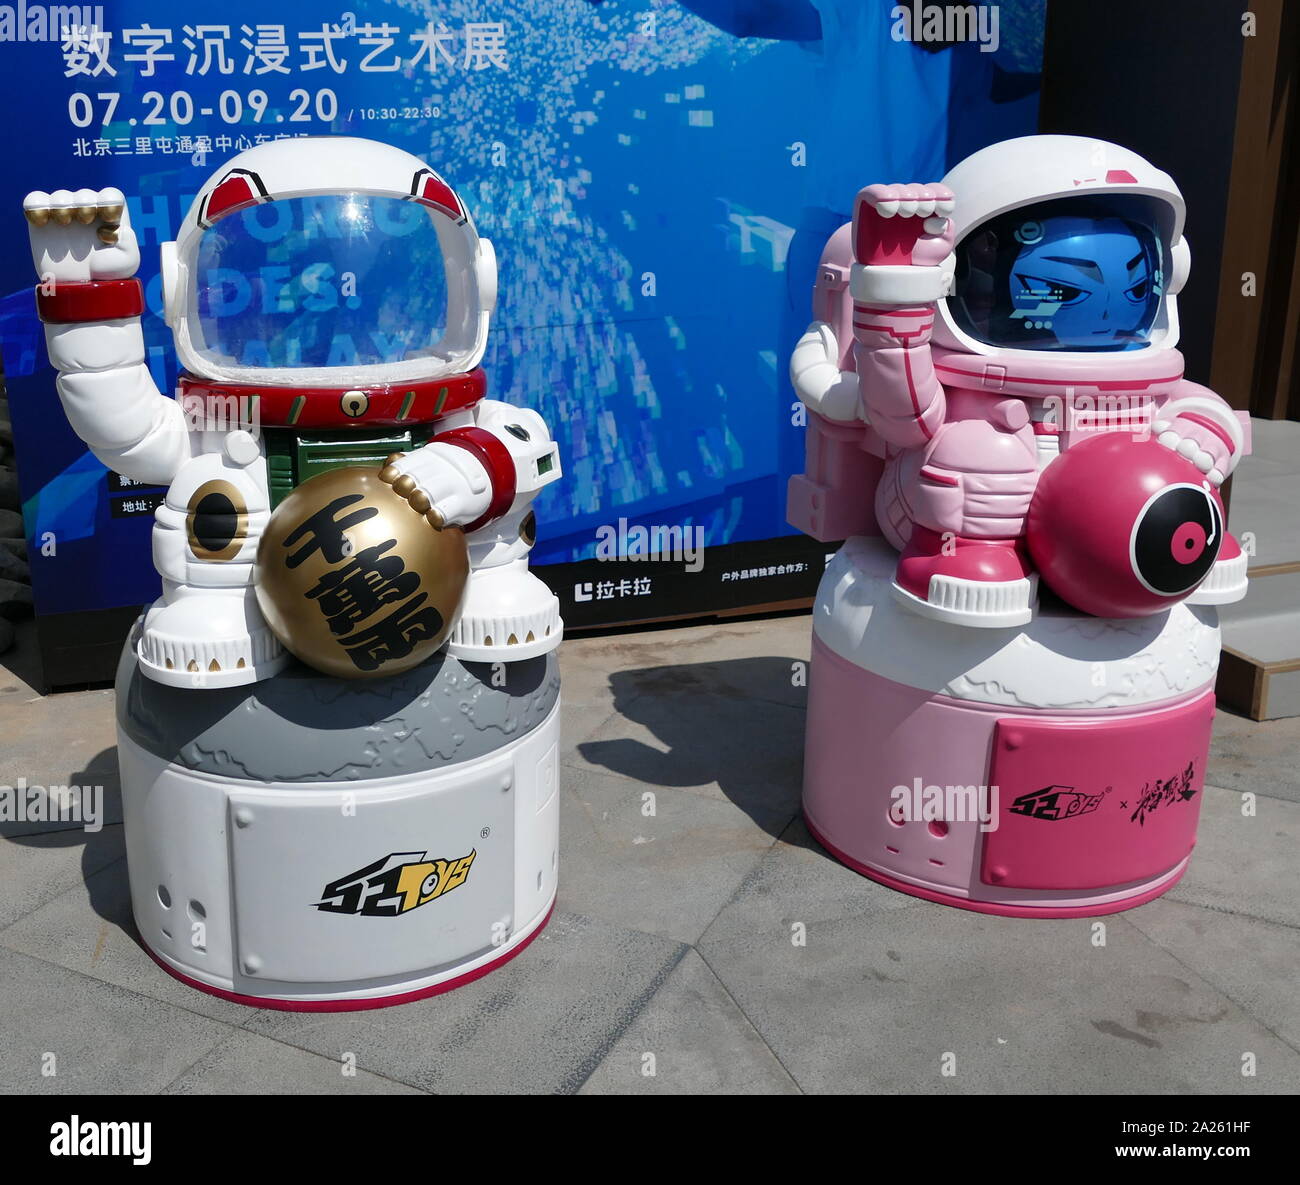 Astronaut figures welcome visitors to the Beijing 'Digital Immersive Art Exhibition' 2019 Stock Photo